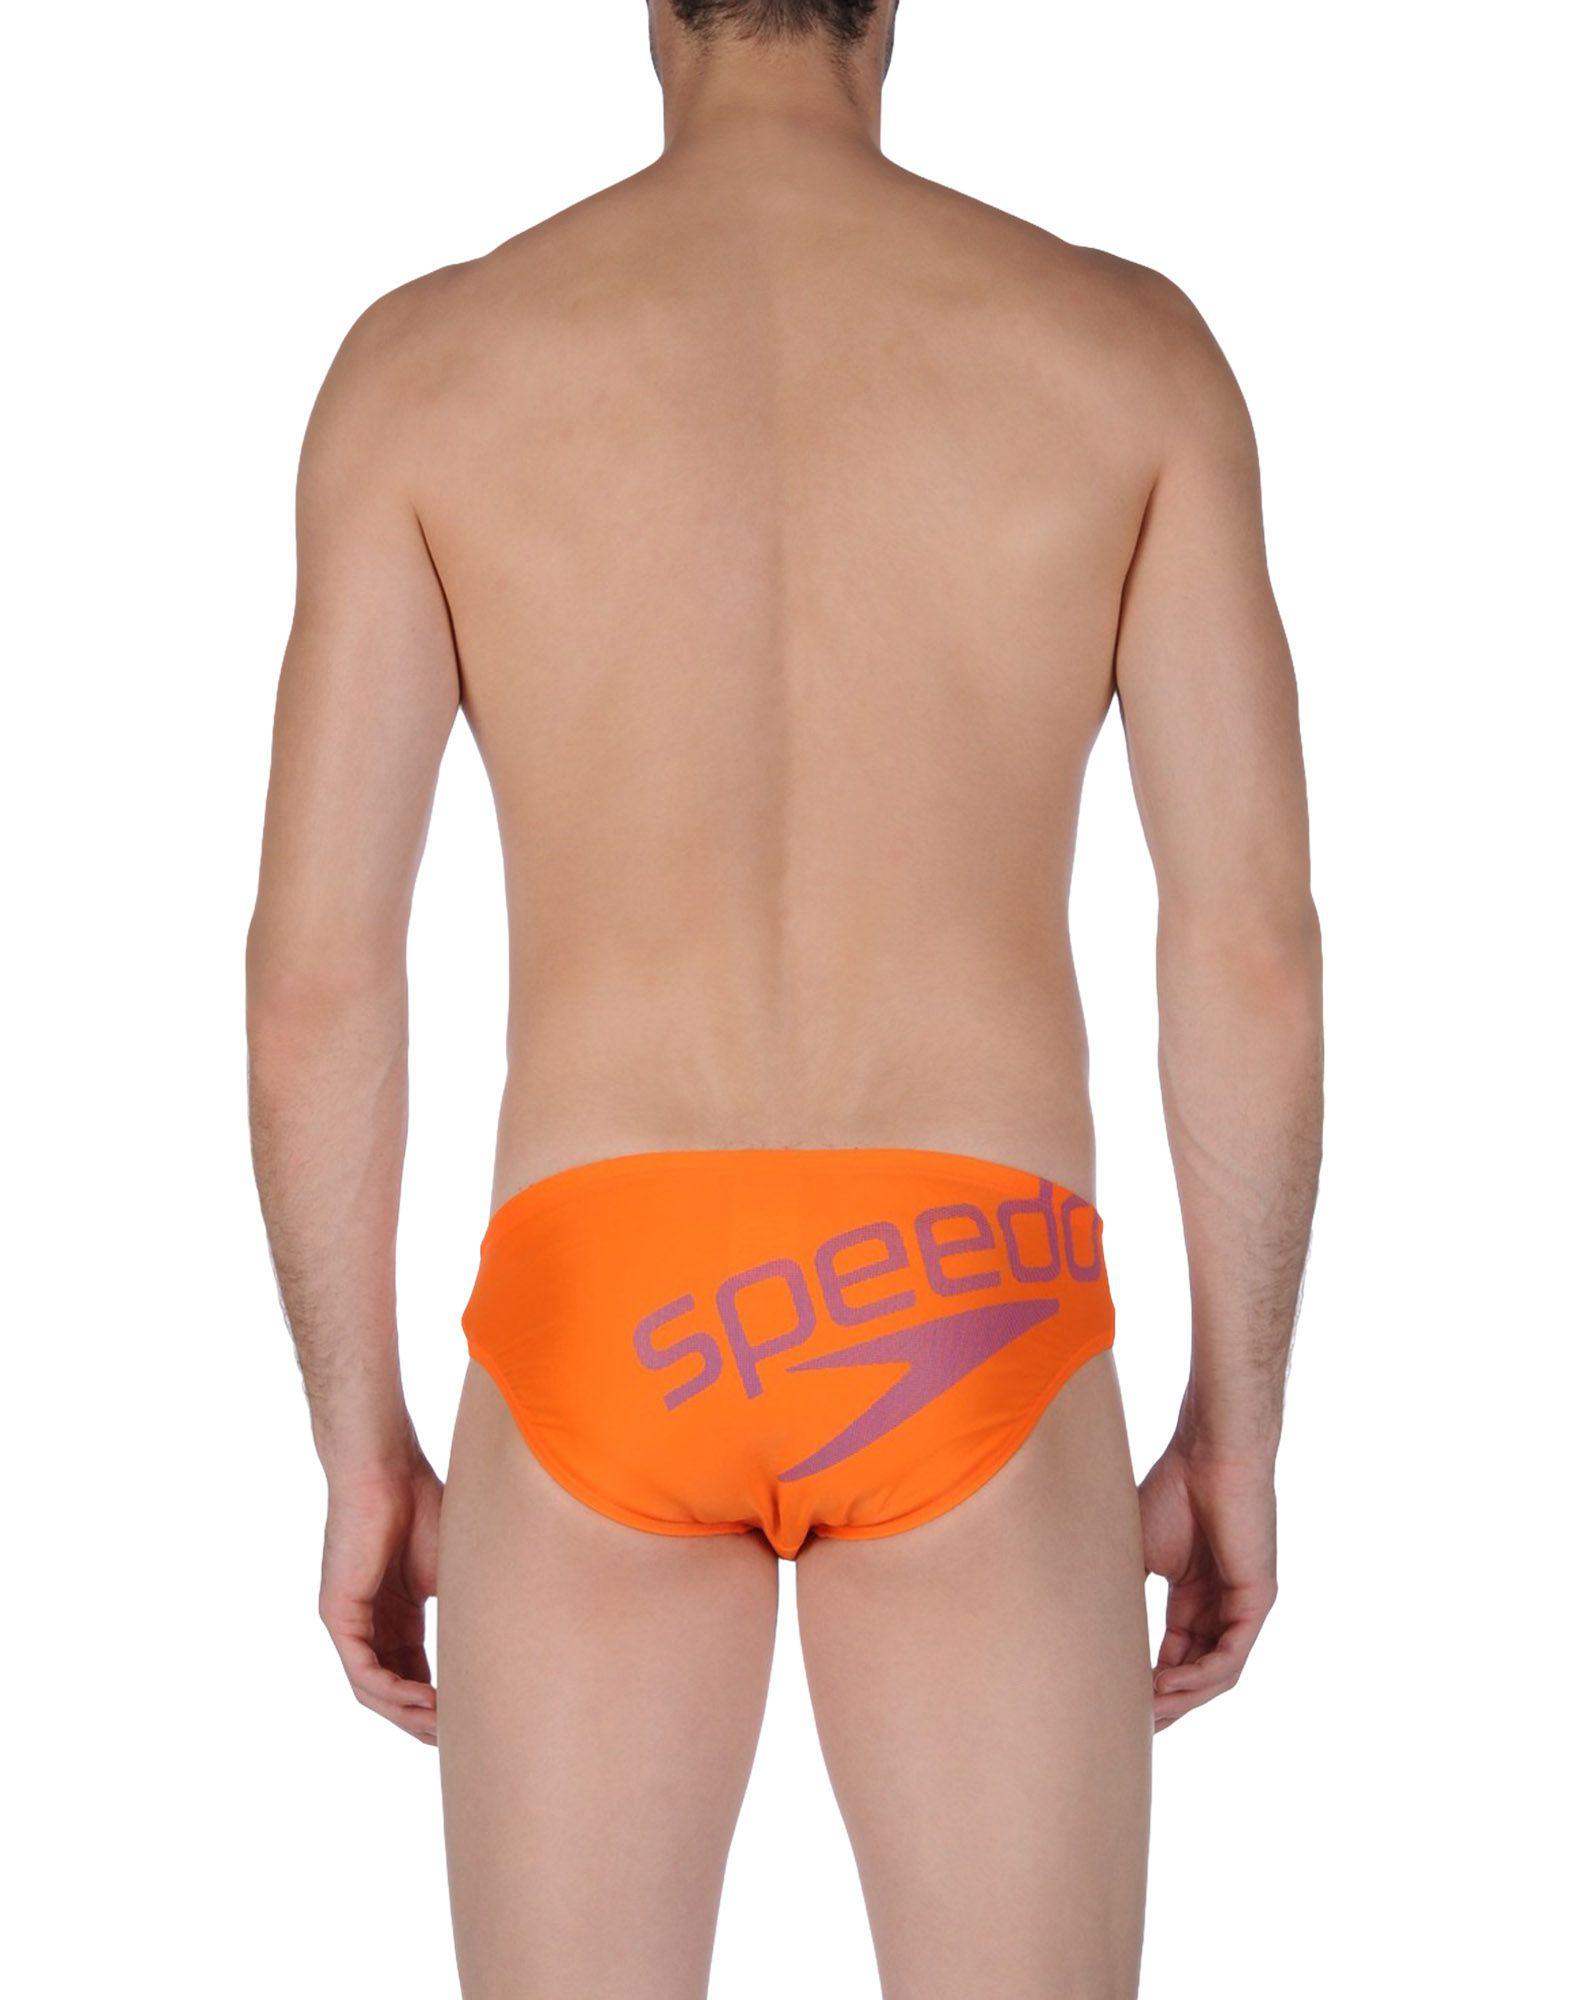 Speedo Synthetic Swim Brief in Orange for Men - Lyst